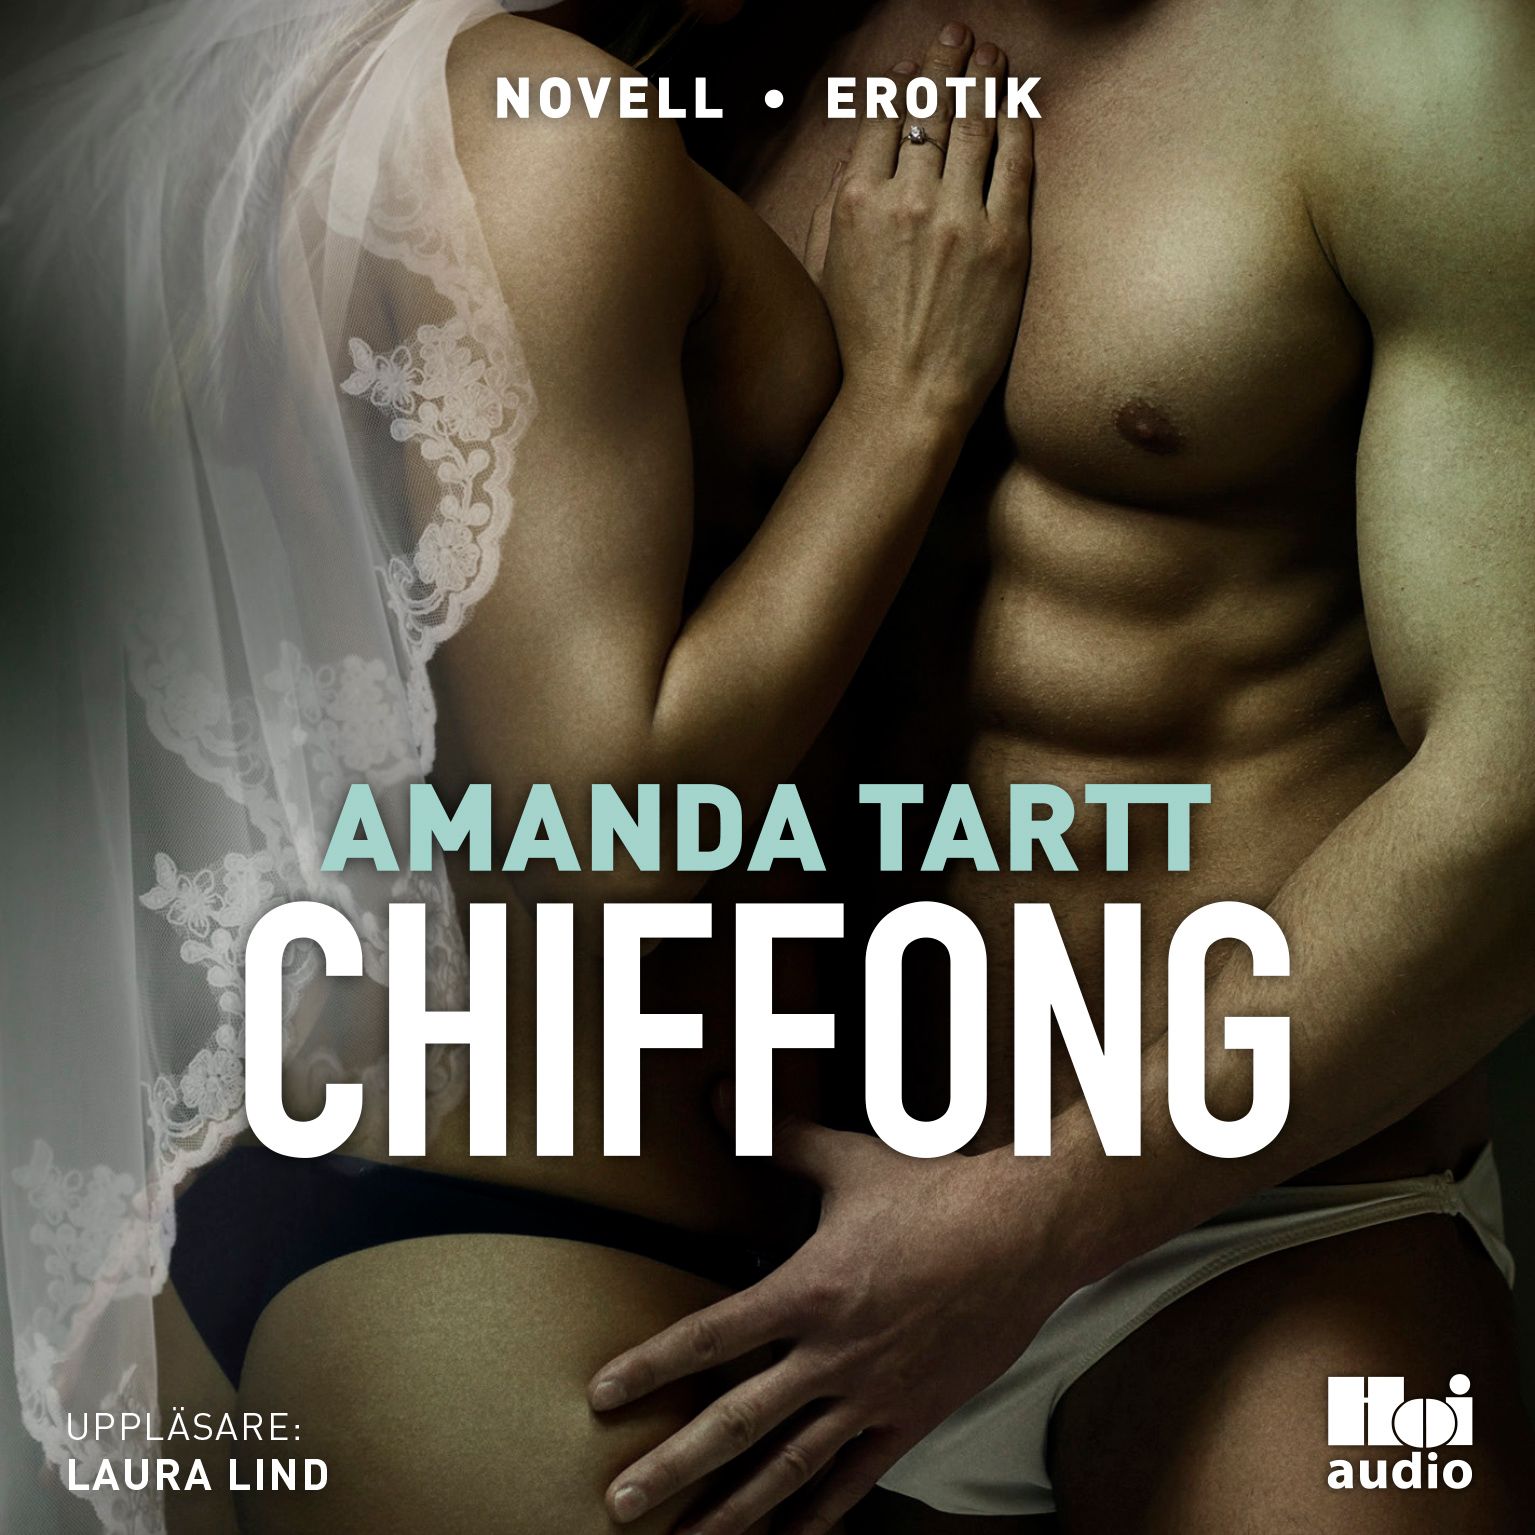 Chiffong, audiobook by Amanda Tartt